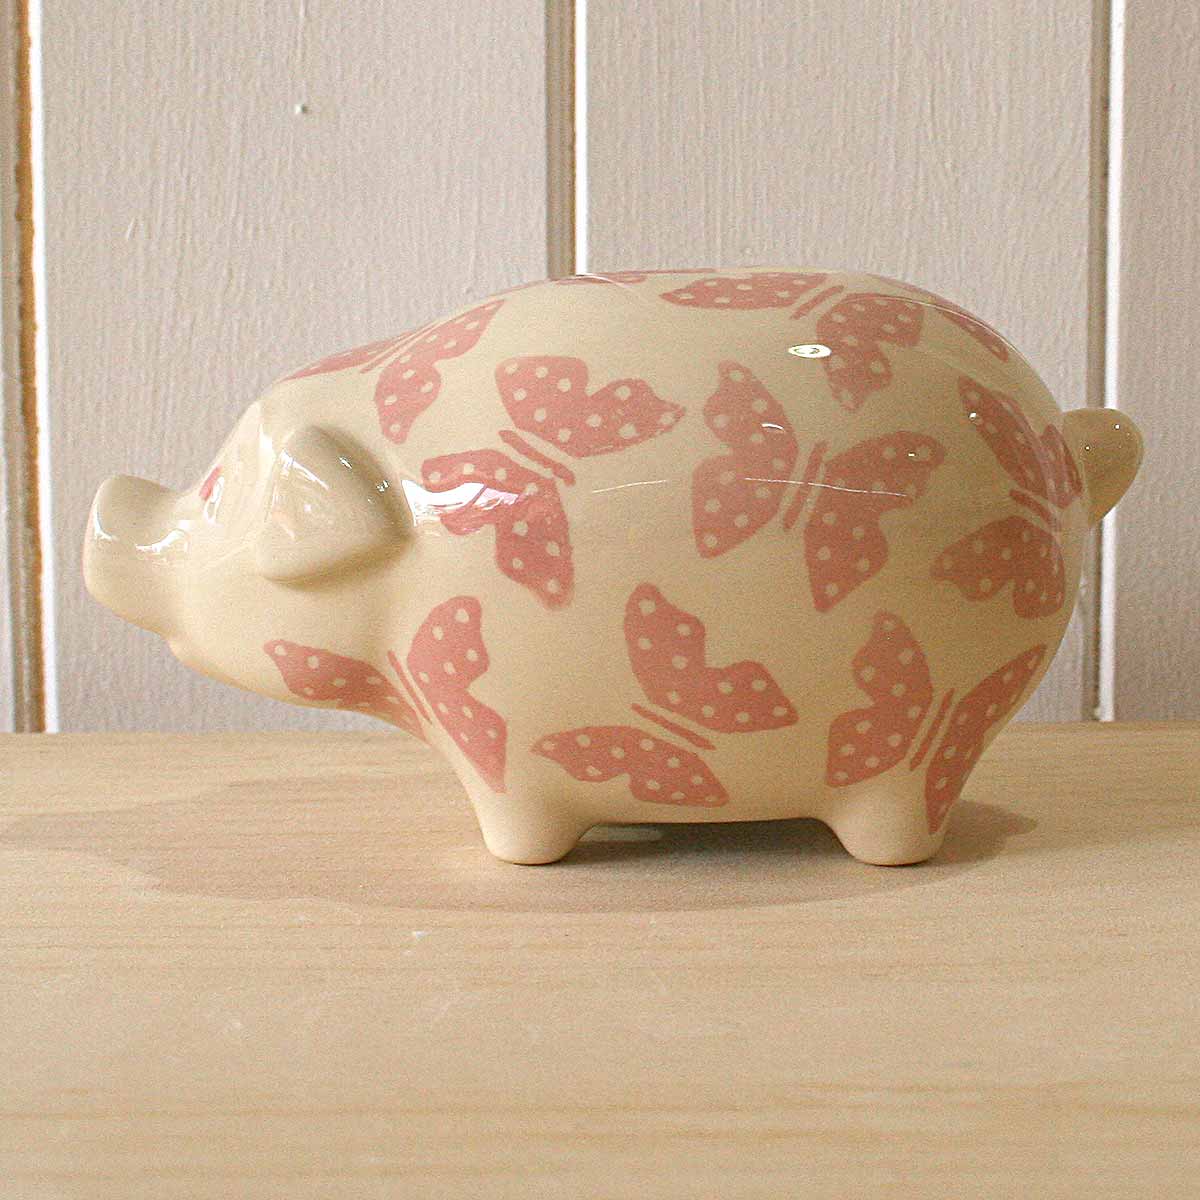 china pig on wood surface